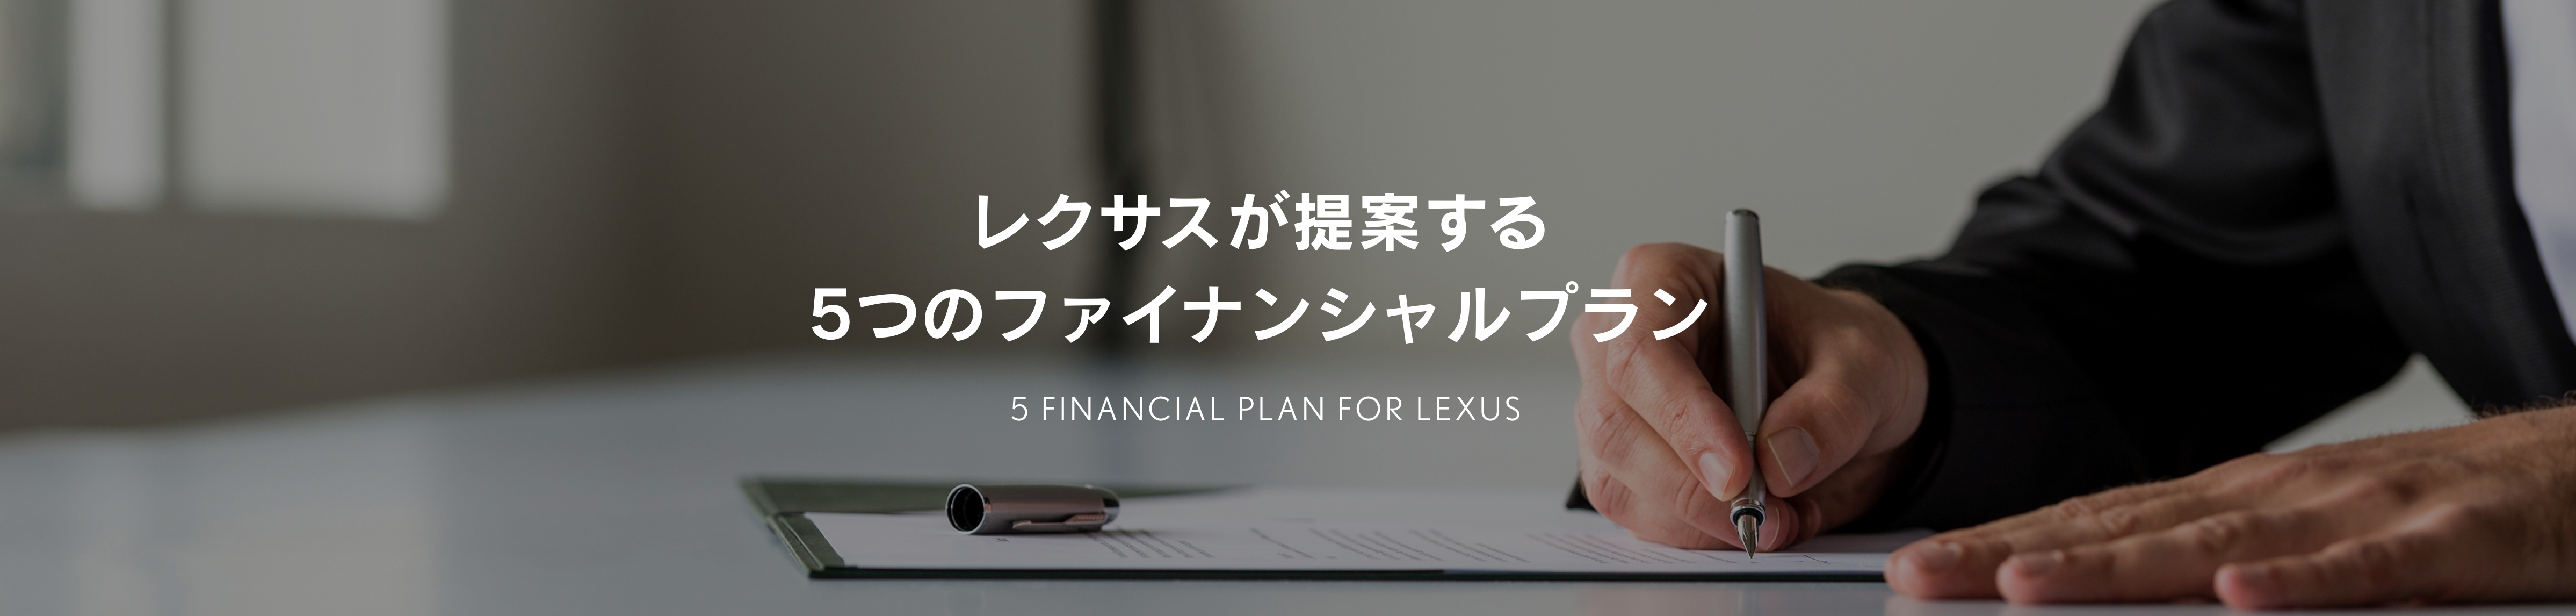 UX300e | LEXUS TOKYO（レクサス東京）